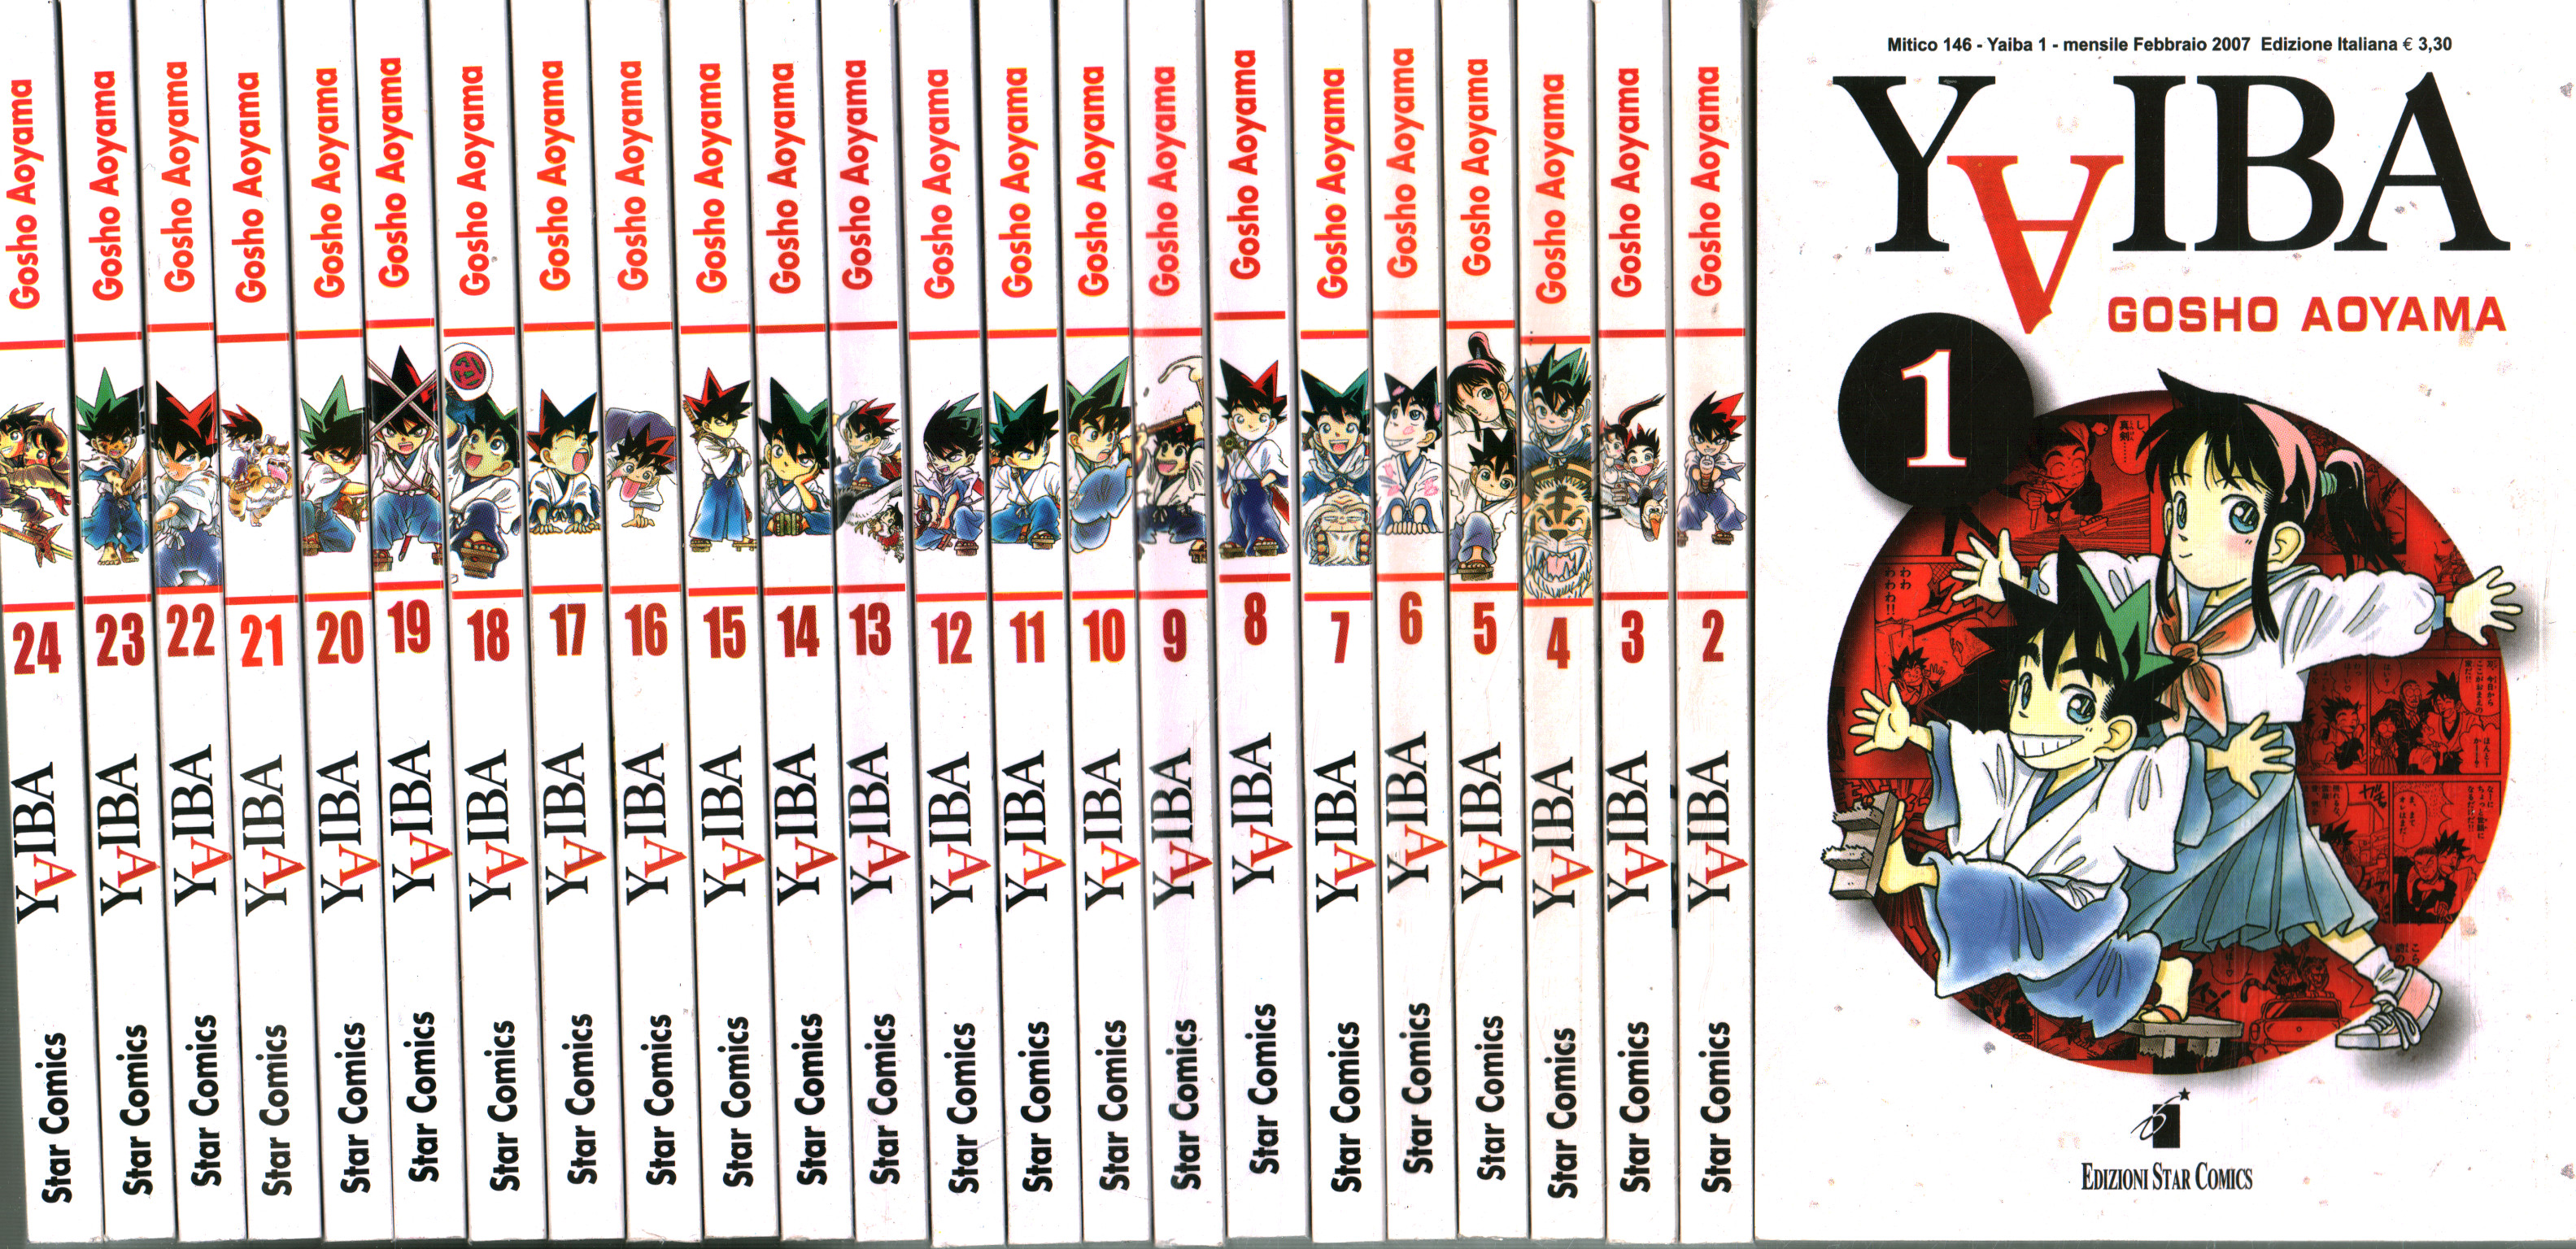 Yaiba. Complete series (24 volumes), Goyo Aoyama